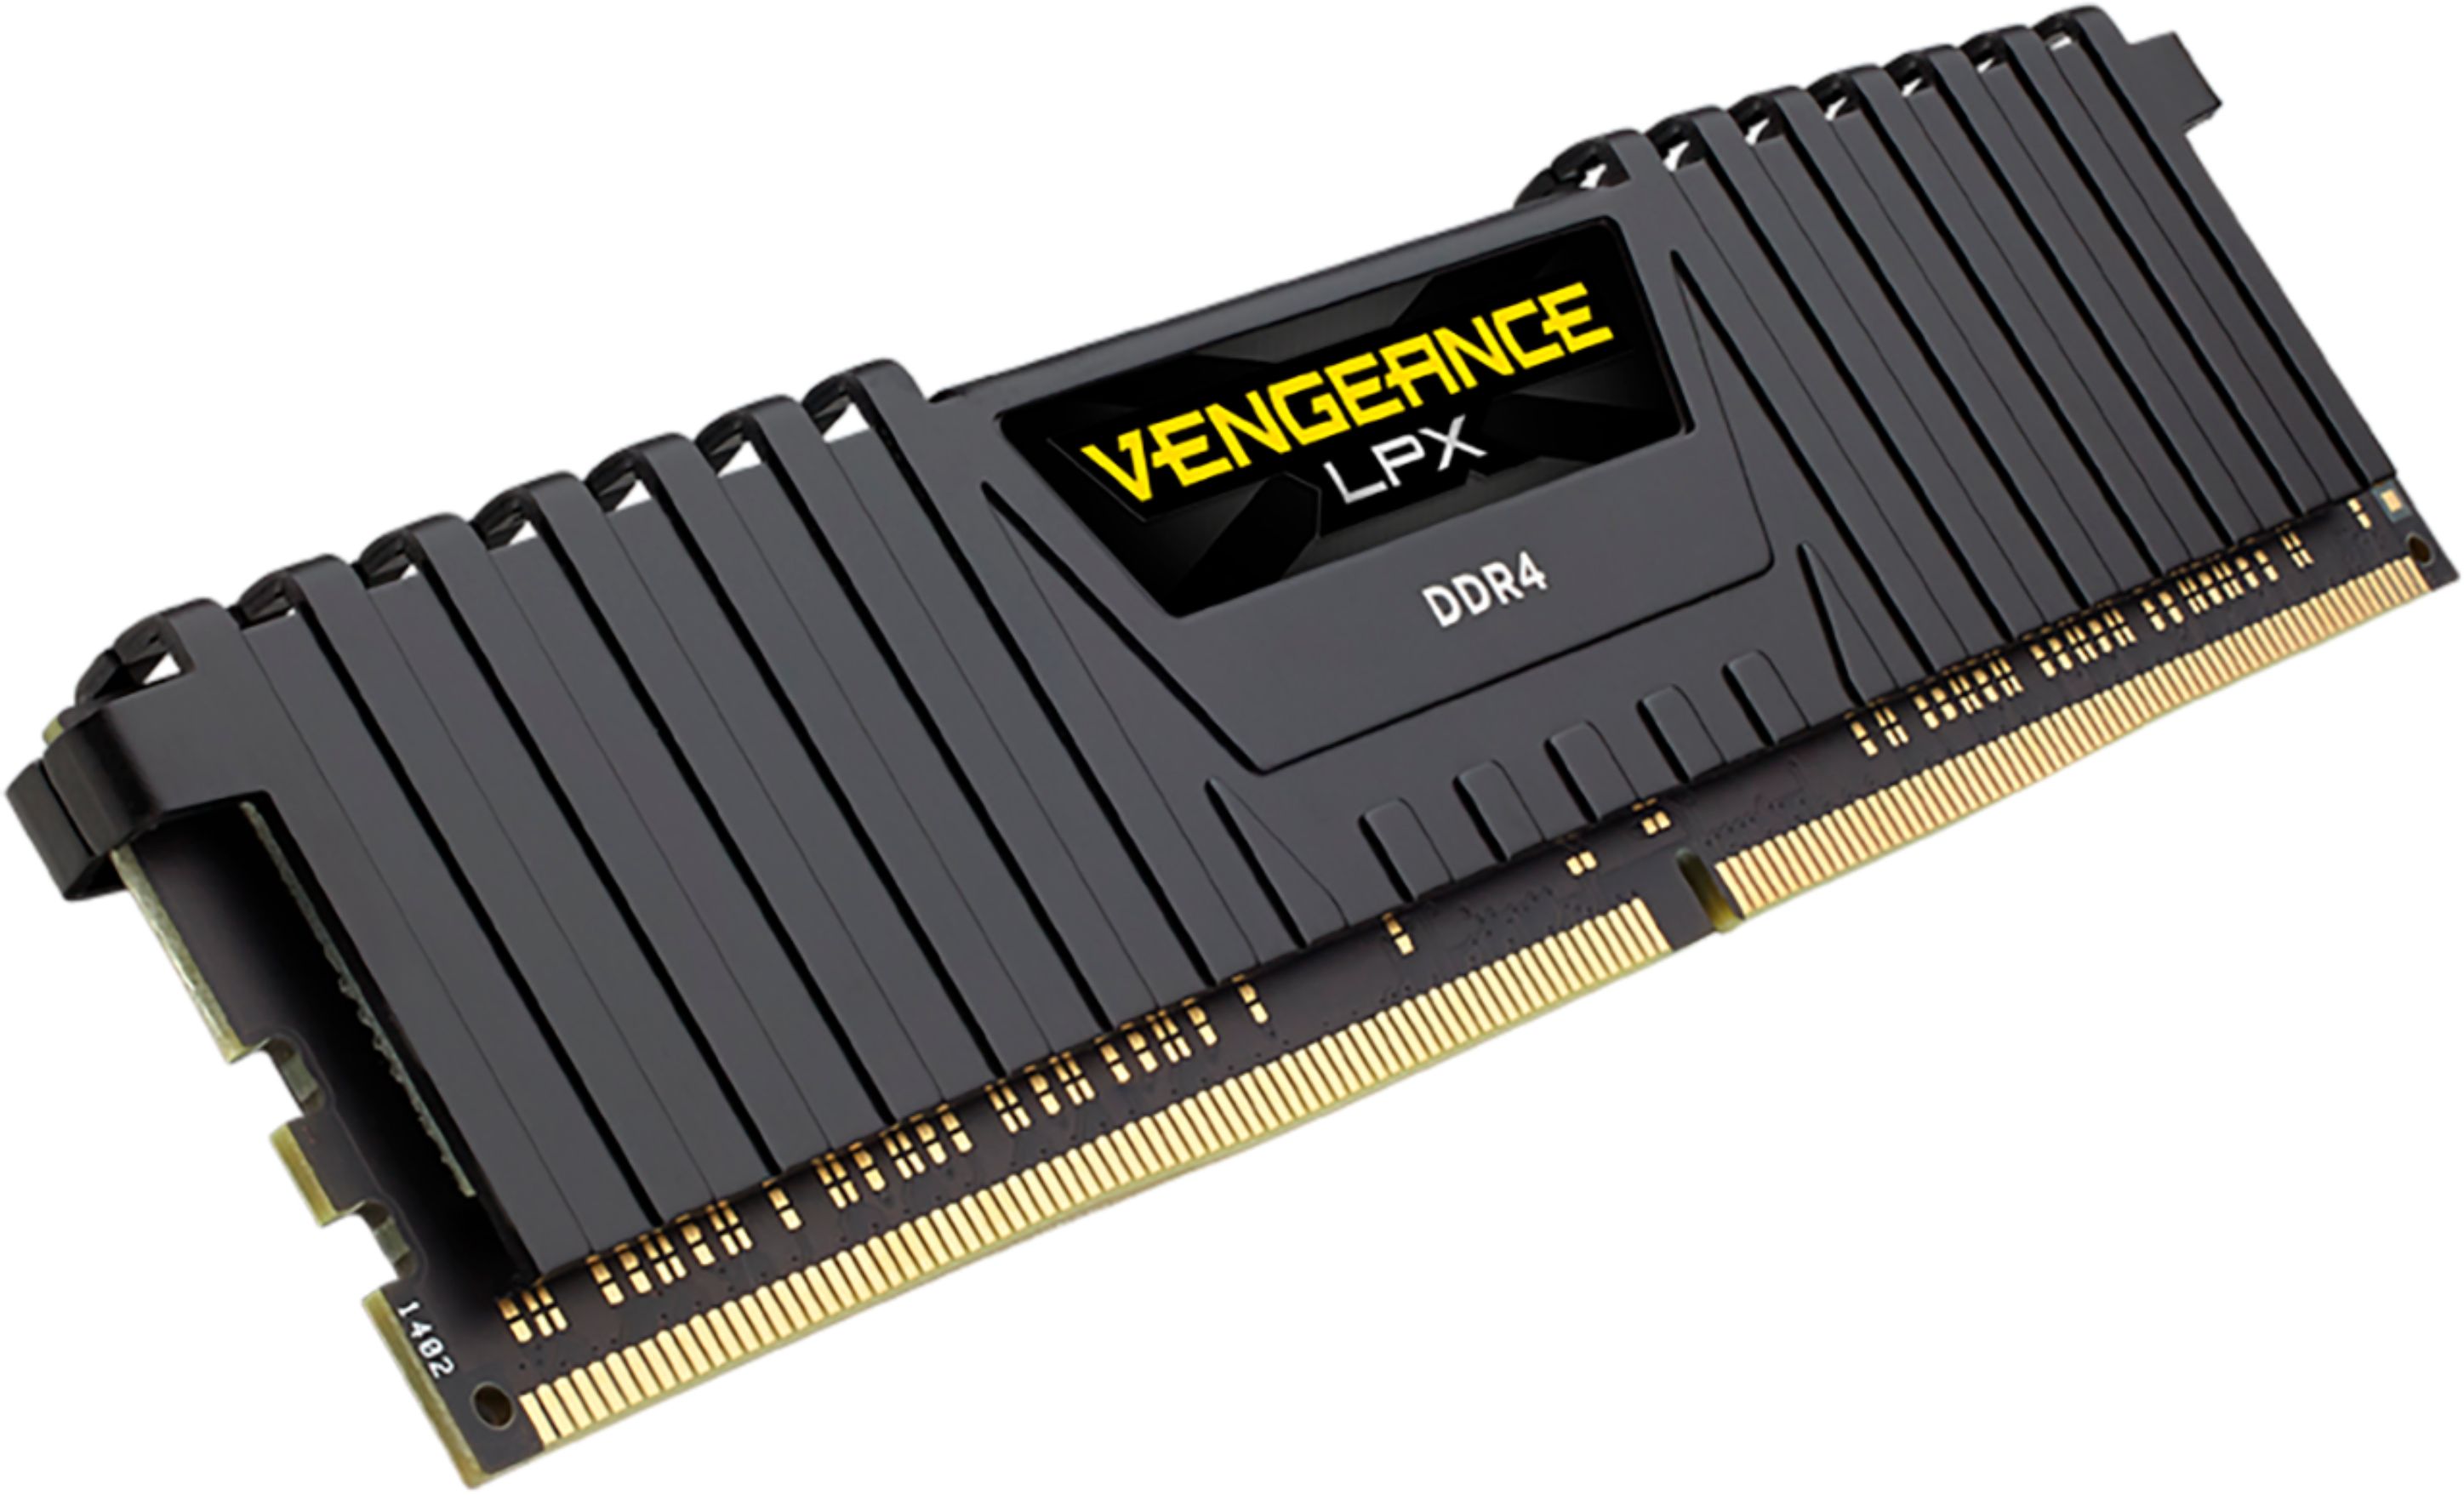 Corsair Vengeance LPX 16GB DDR4 3000 MHz RAM Kit Review 